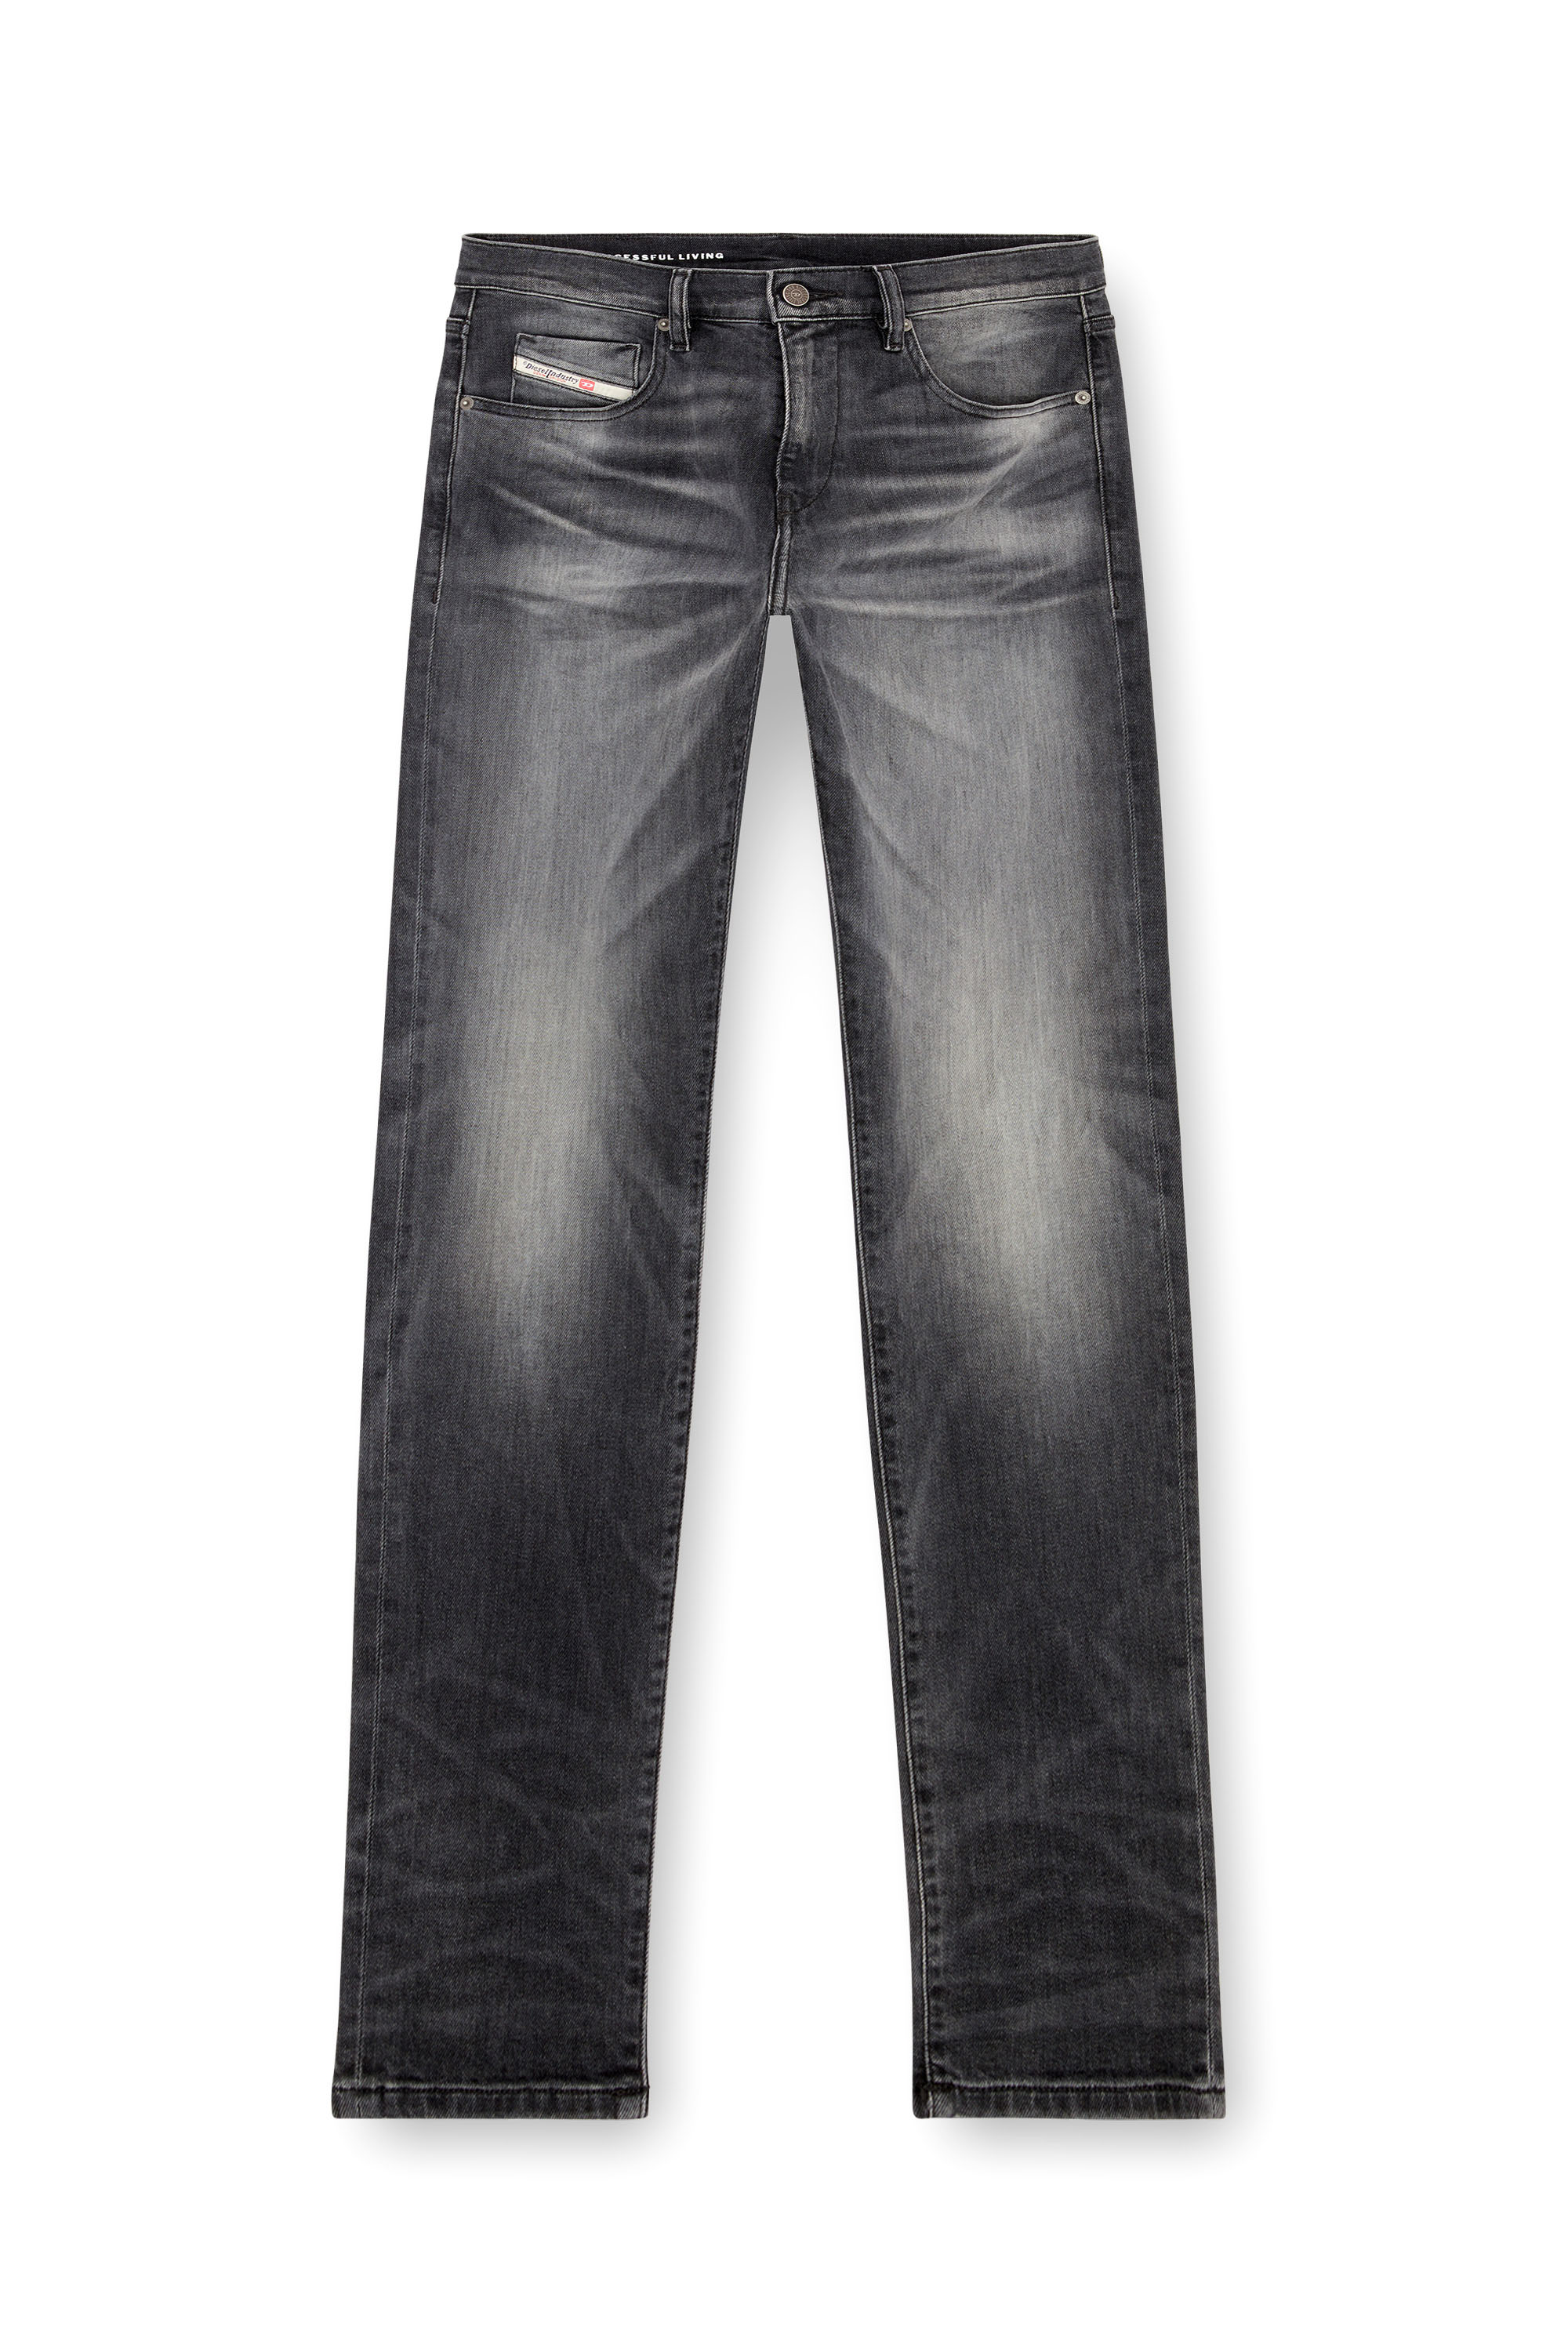 Diesel - Slim Jeans 2019 D-Strukt 09J52, Hombre Slim Jeans - 2019 D-Strukt in Negro - Image 5